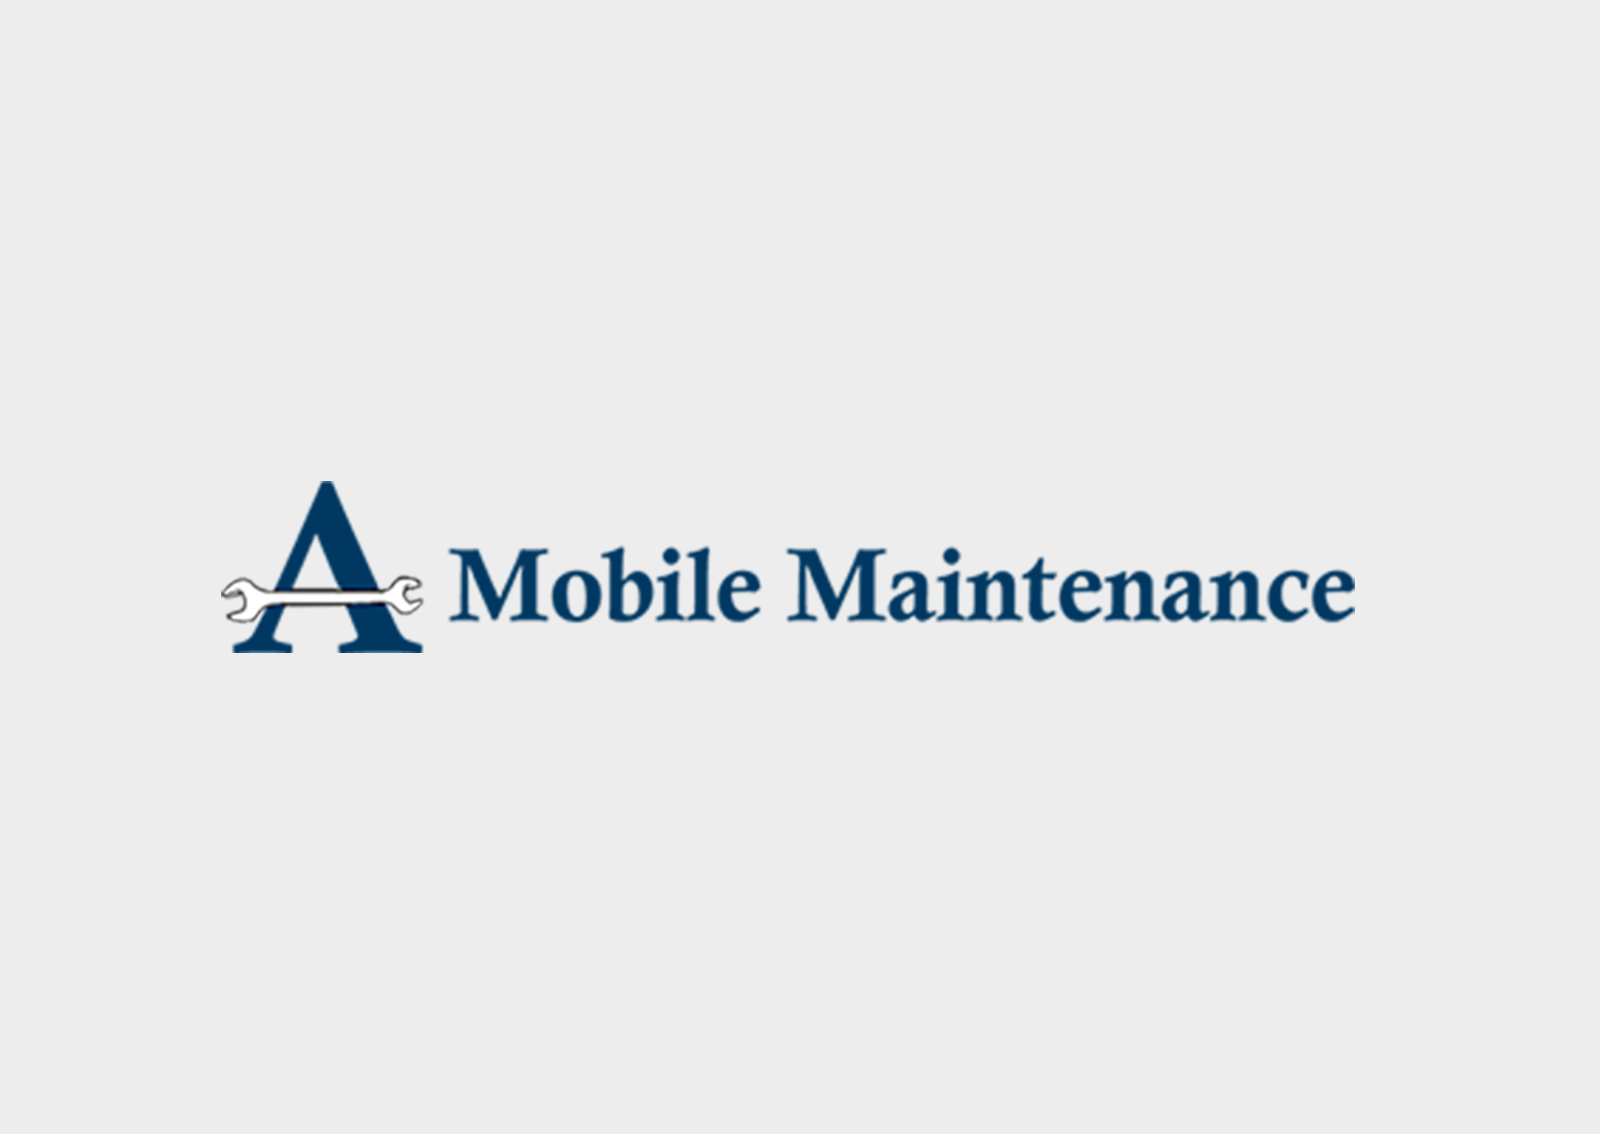 A-Mobile Maintenance